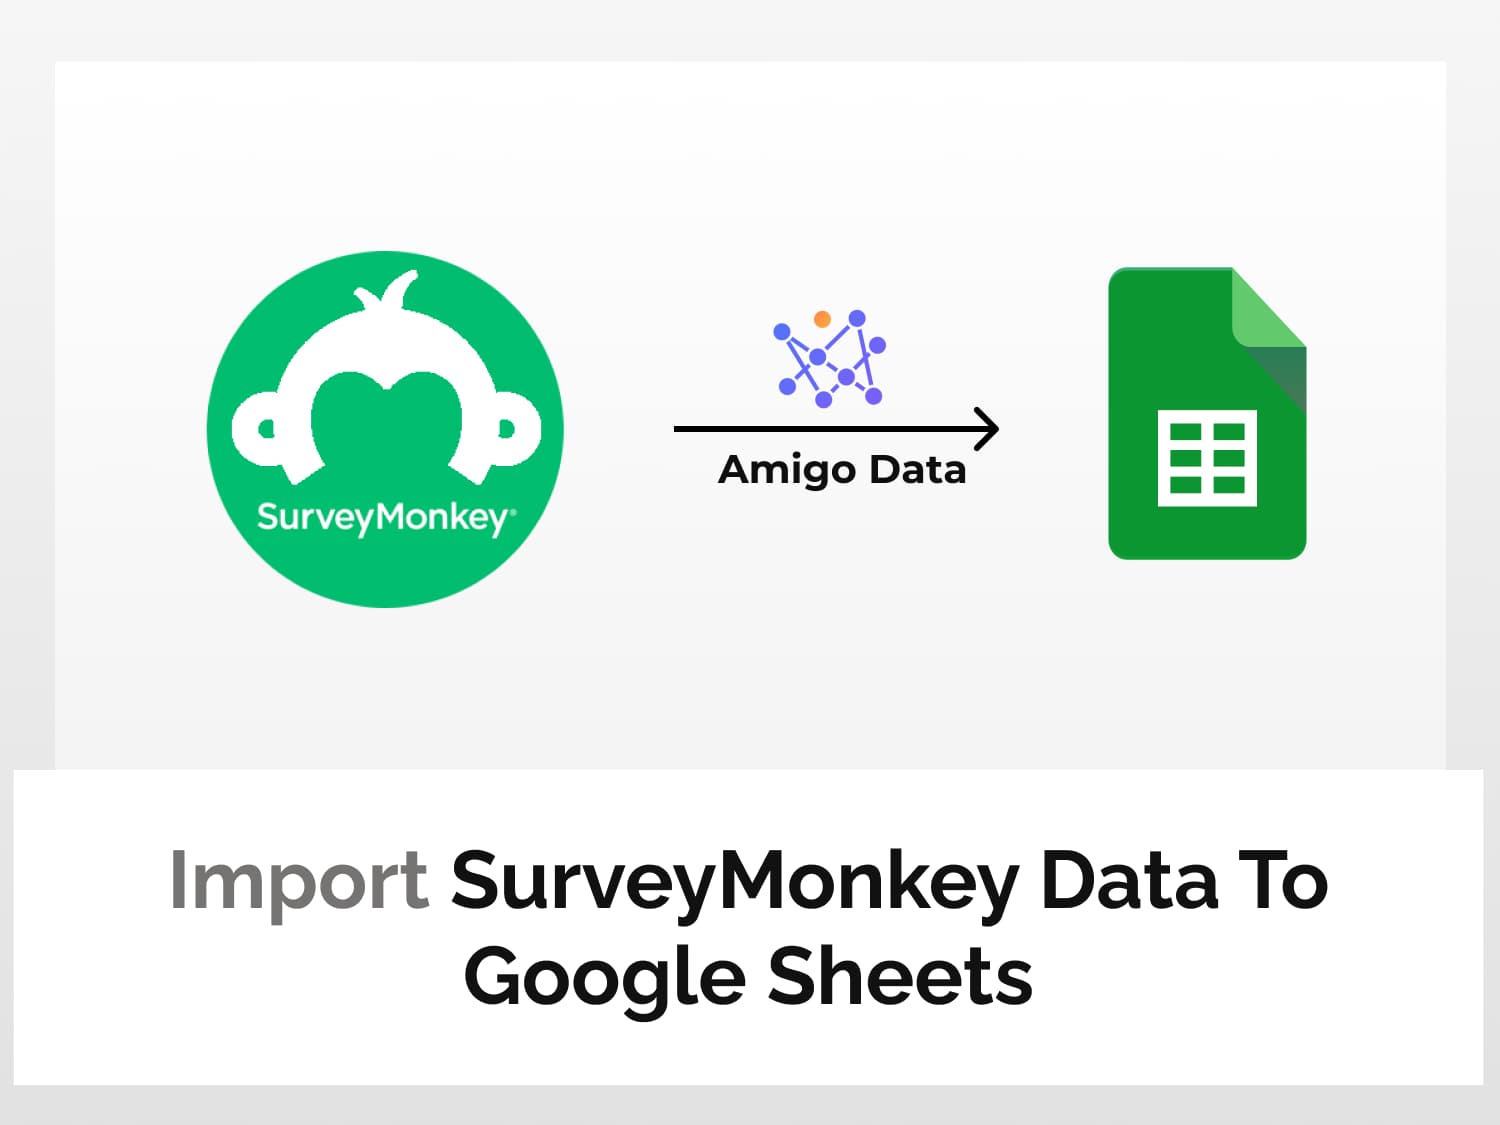 How to import SurveyMonkey data to Google Sheets